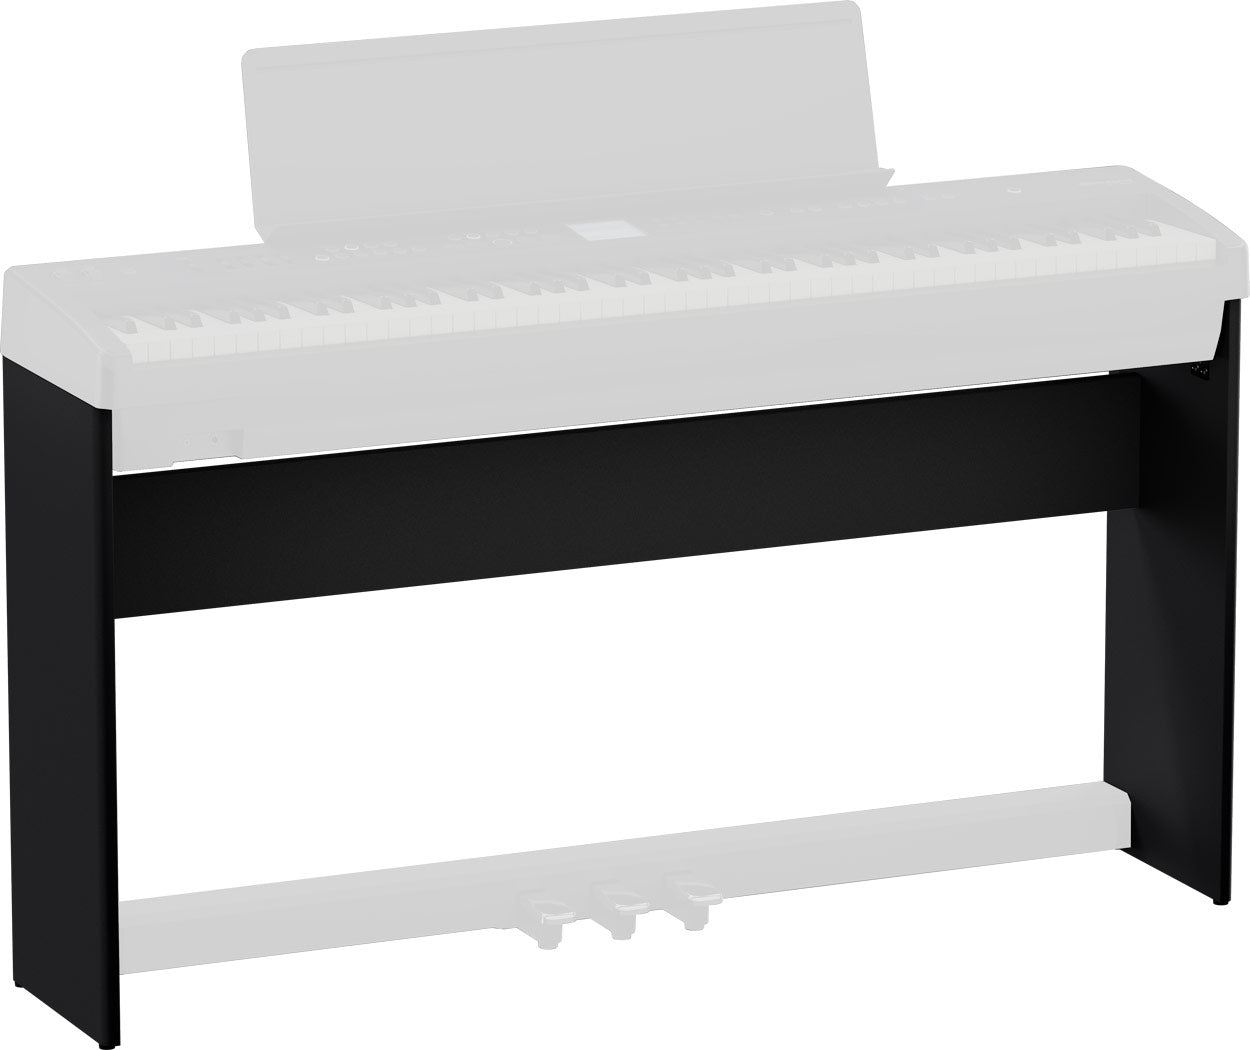 Roland FP-30X Digital Piano - White KEY ESSENTIALS BUNDLE